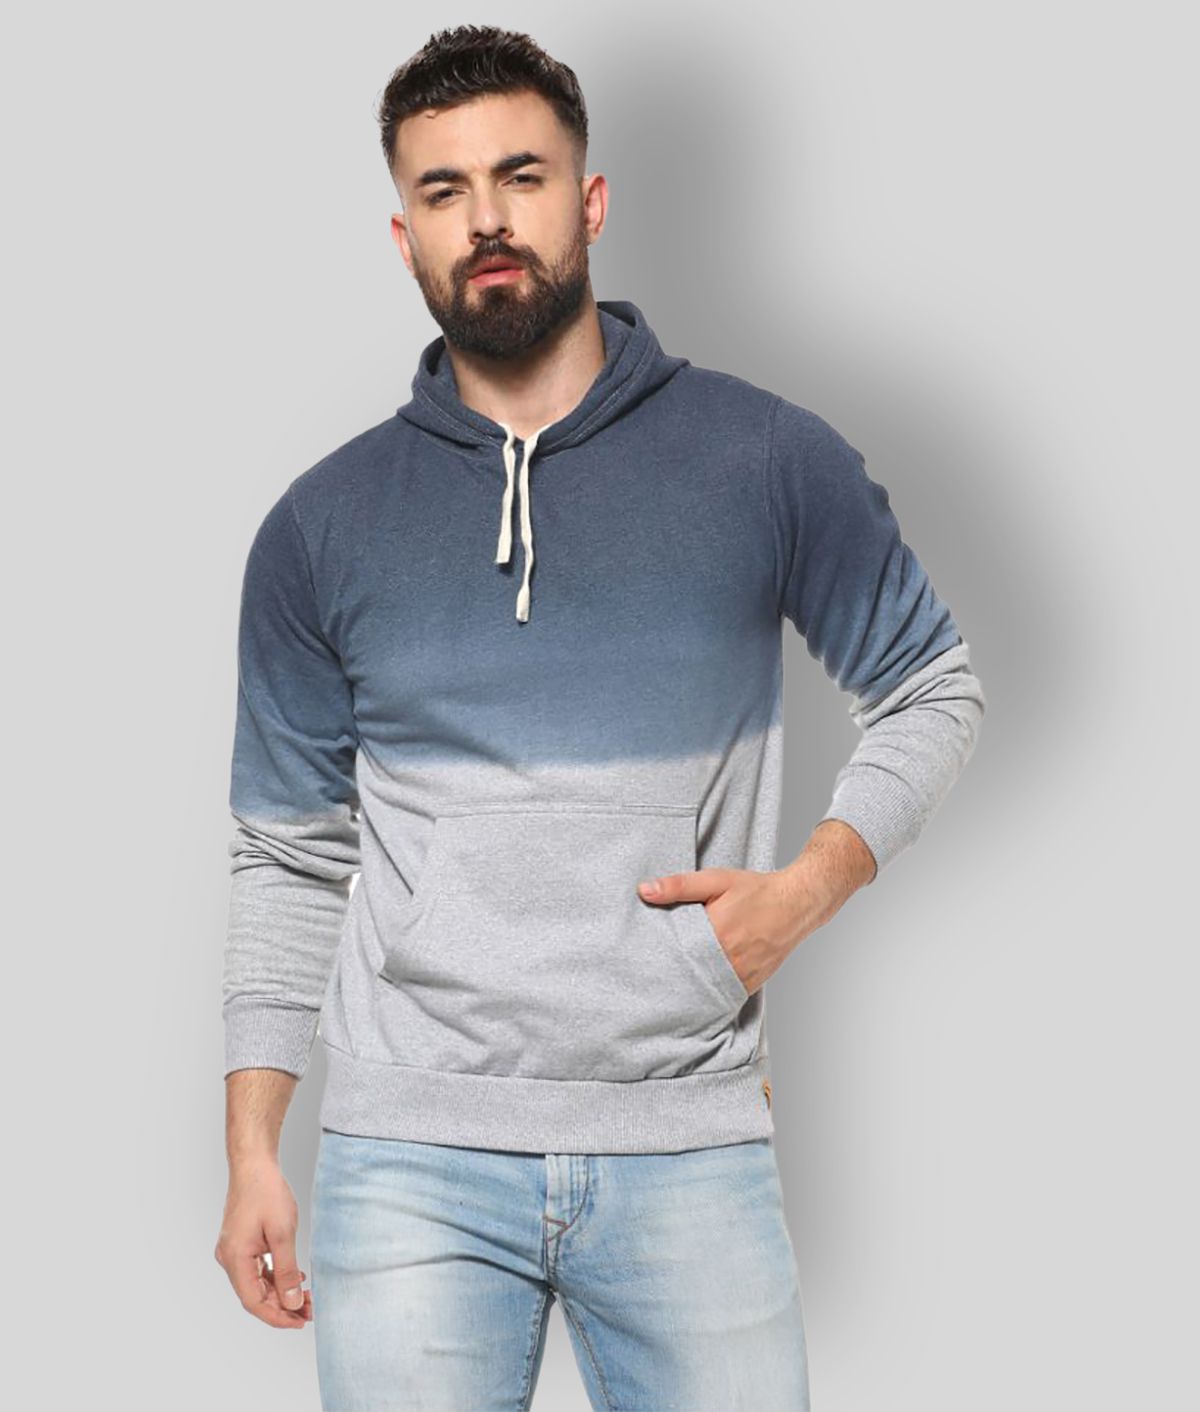     			Campus Sutra - Multi Cotton Regular Fit Men's Sweatshirt ( Pack of 1 )